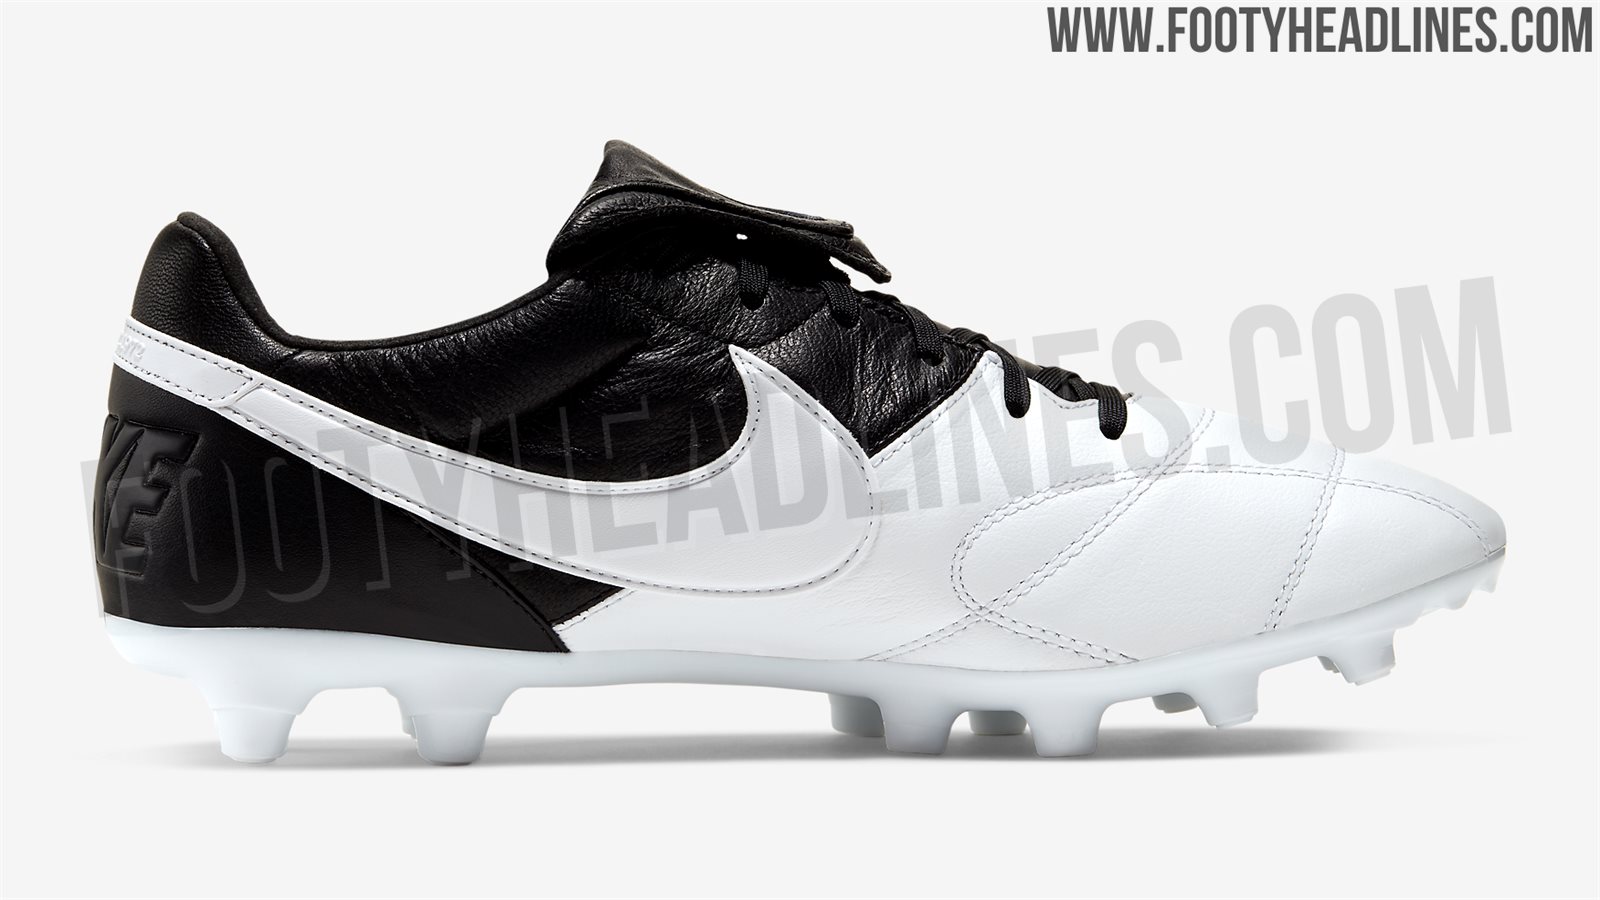 Classy White Black Euro 2012 Inspired Nike Premier II Boots Released - Footy Headlines